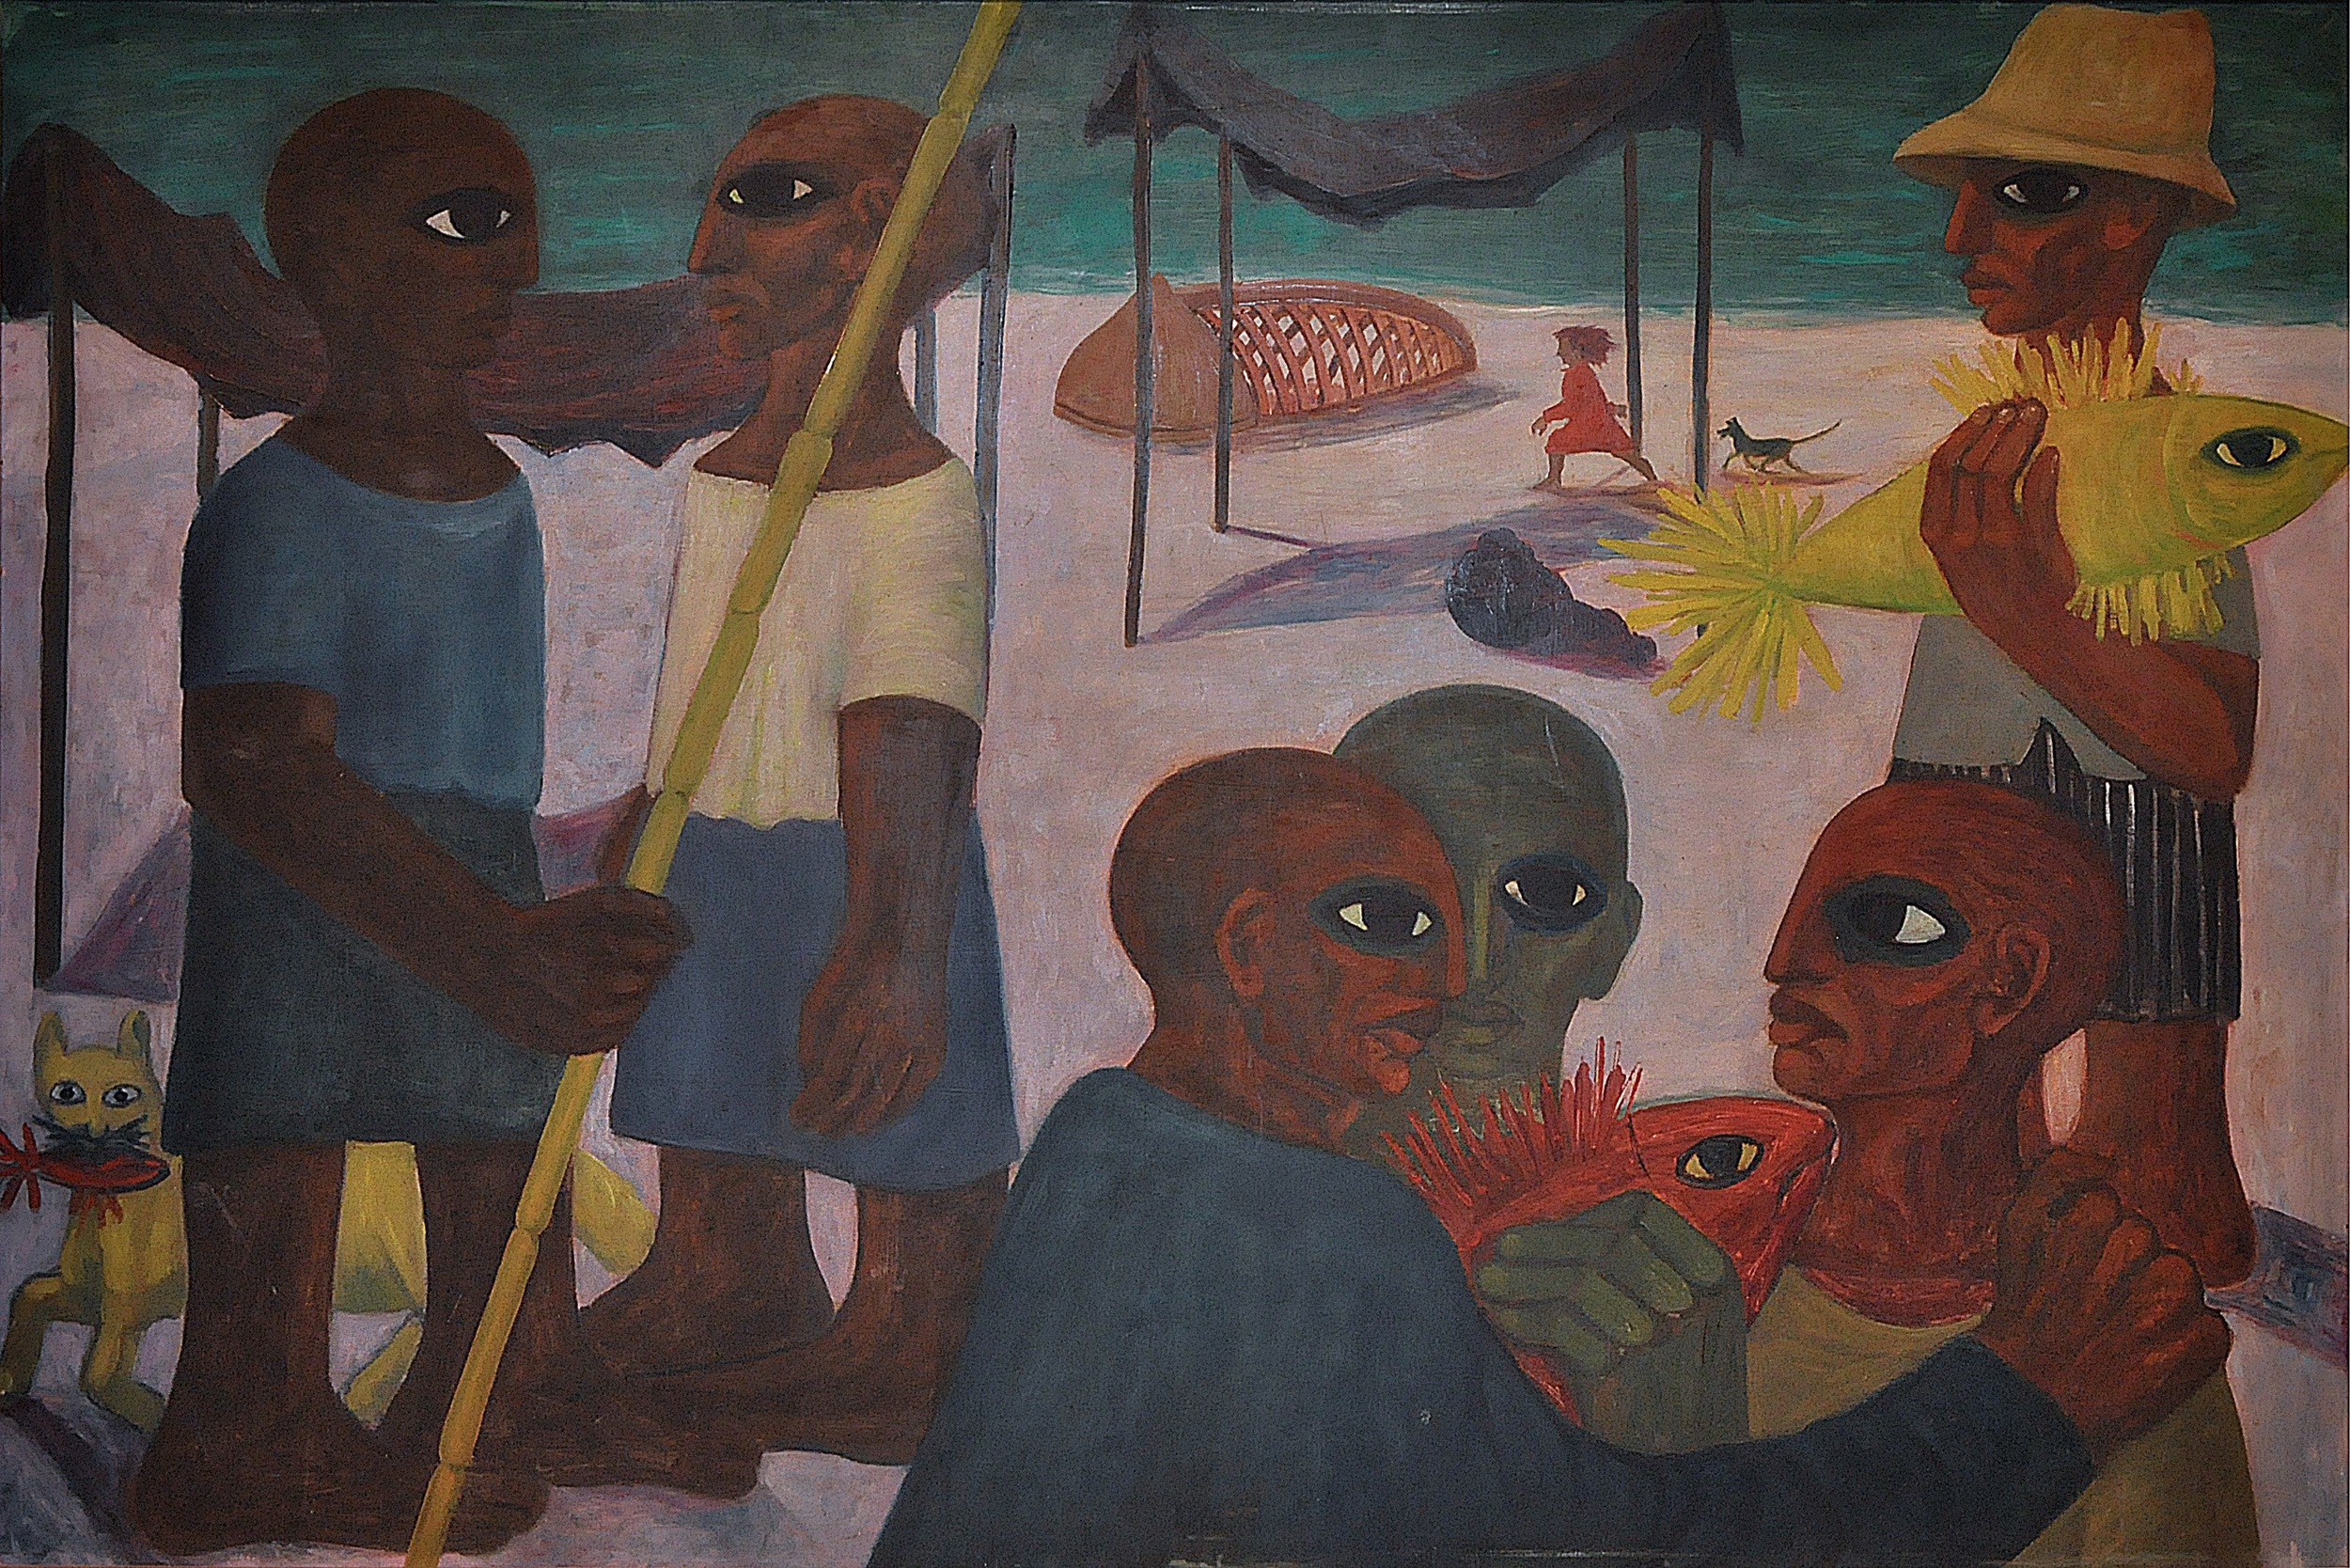  Ahmed Morsi, The Fishermen, 1956, Oil on wood, 150 x 100 cm,&nbsp;Mathaf: Arab Museum of Modern Art Collection. 